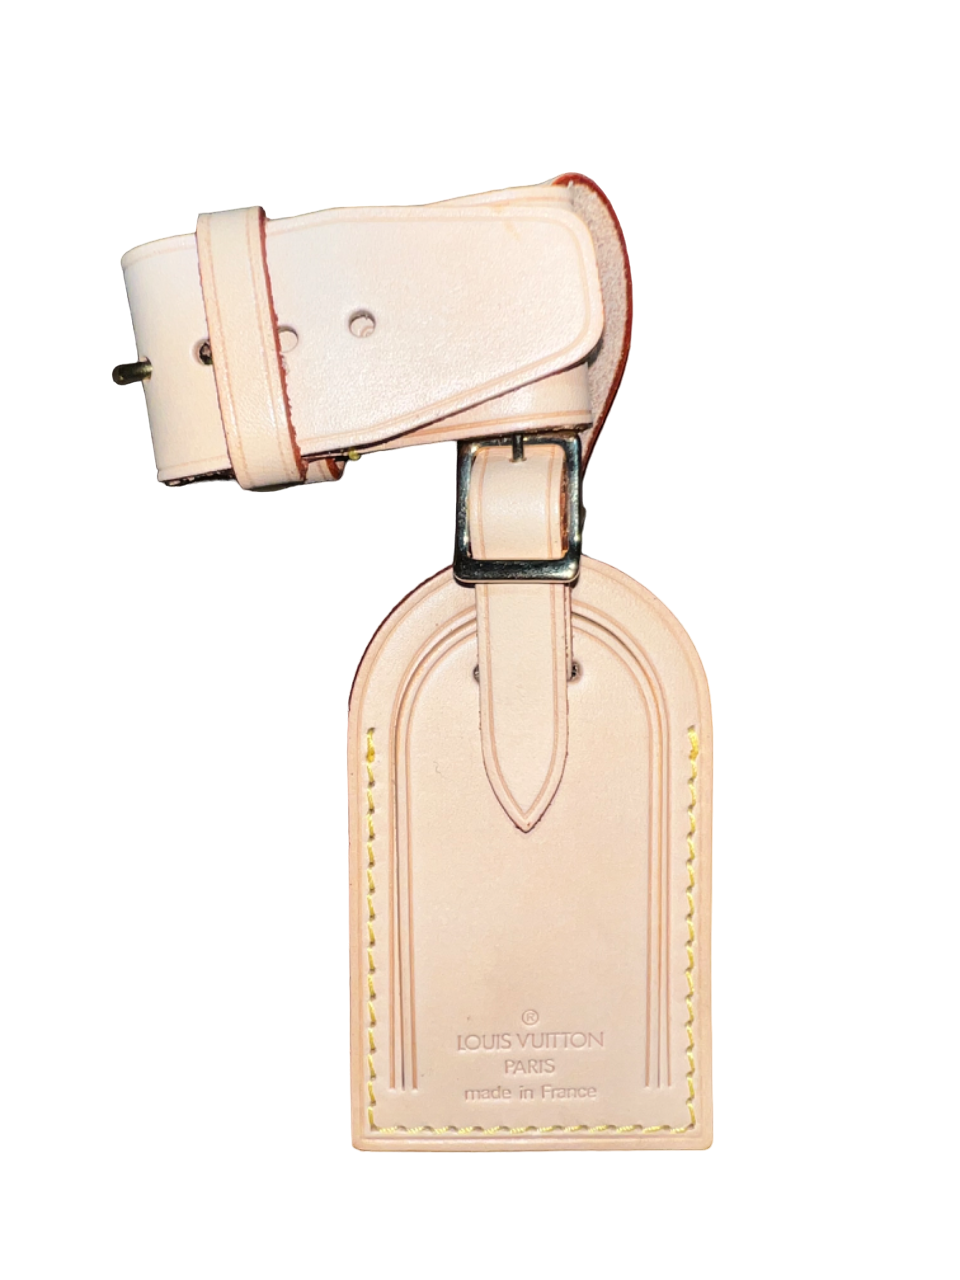 Etichette per bagagli Louis Vuitton in pelle